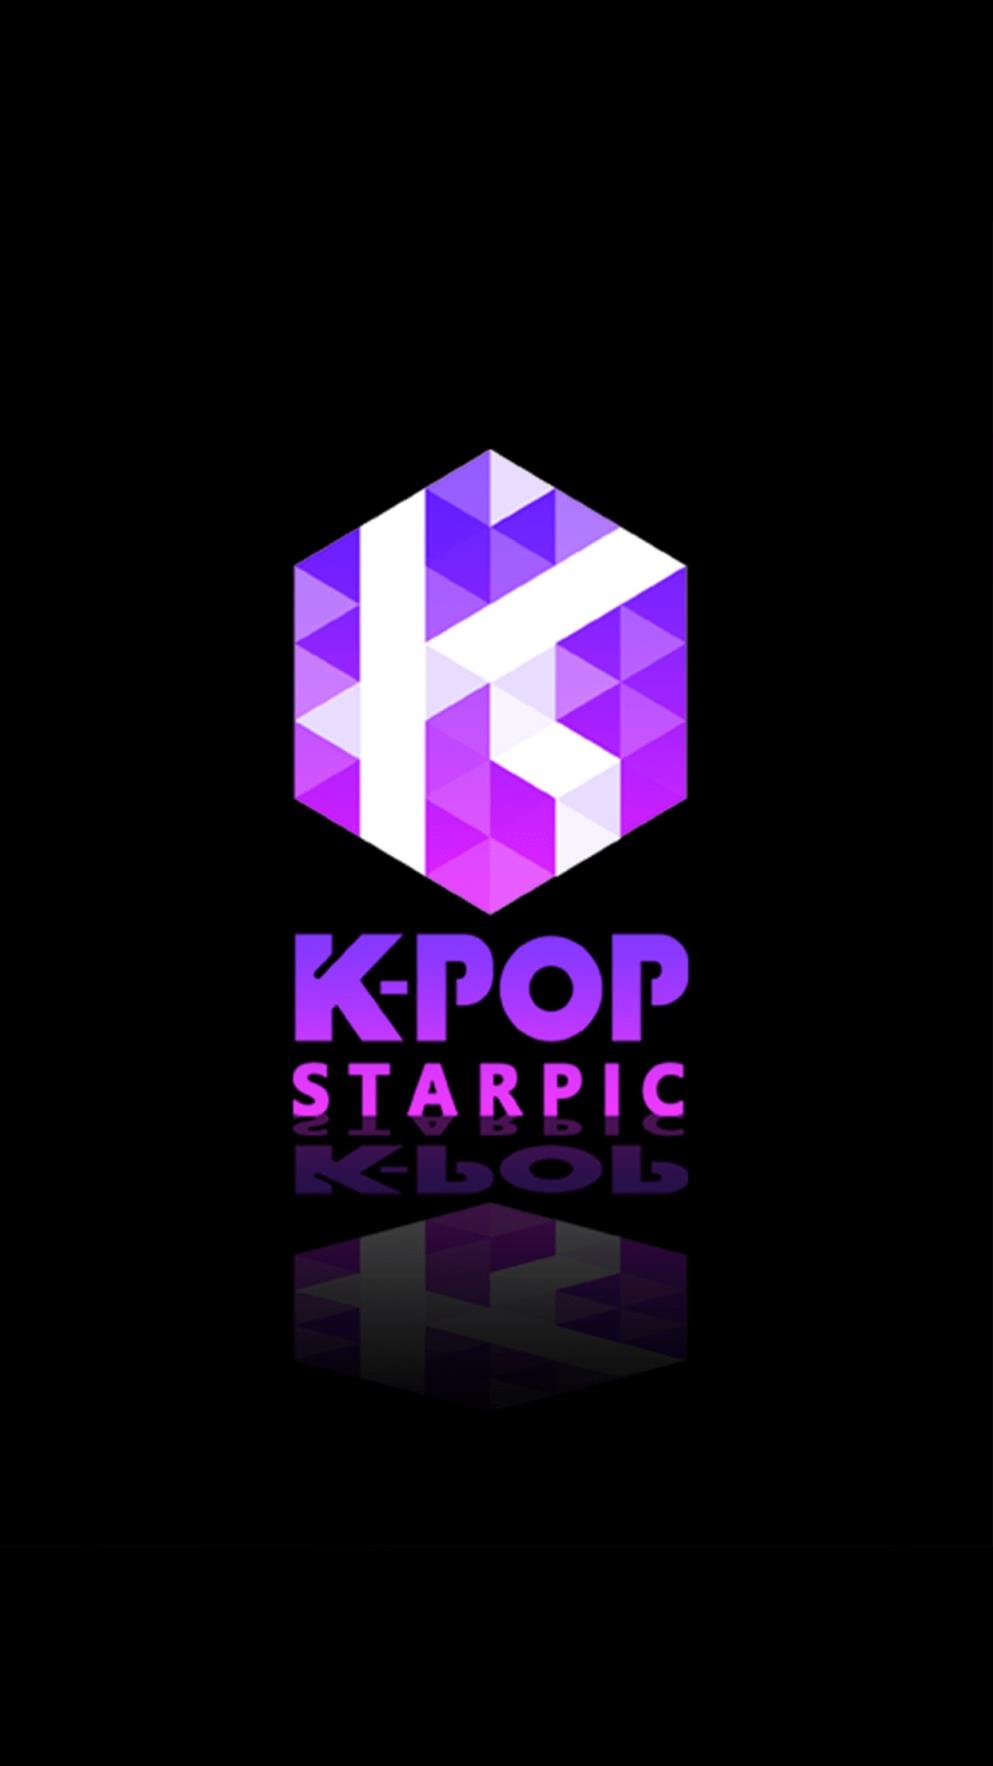 kpopstarpic软件